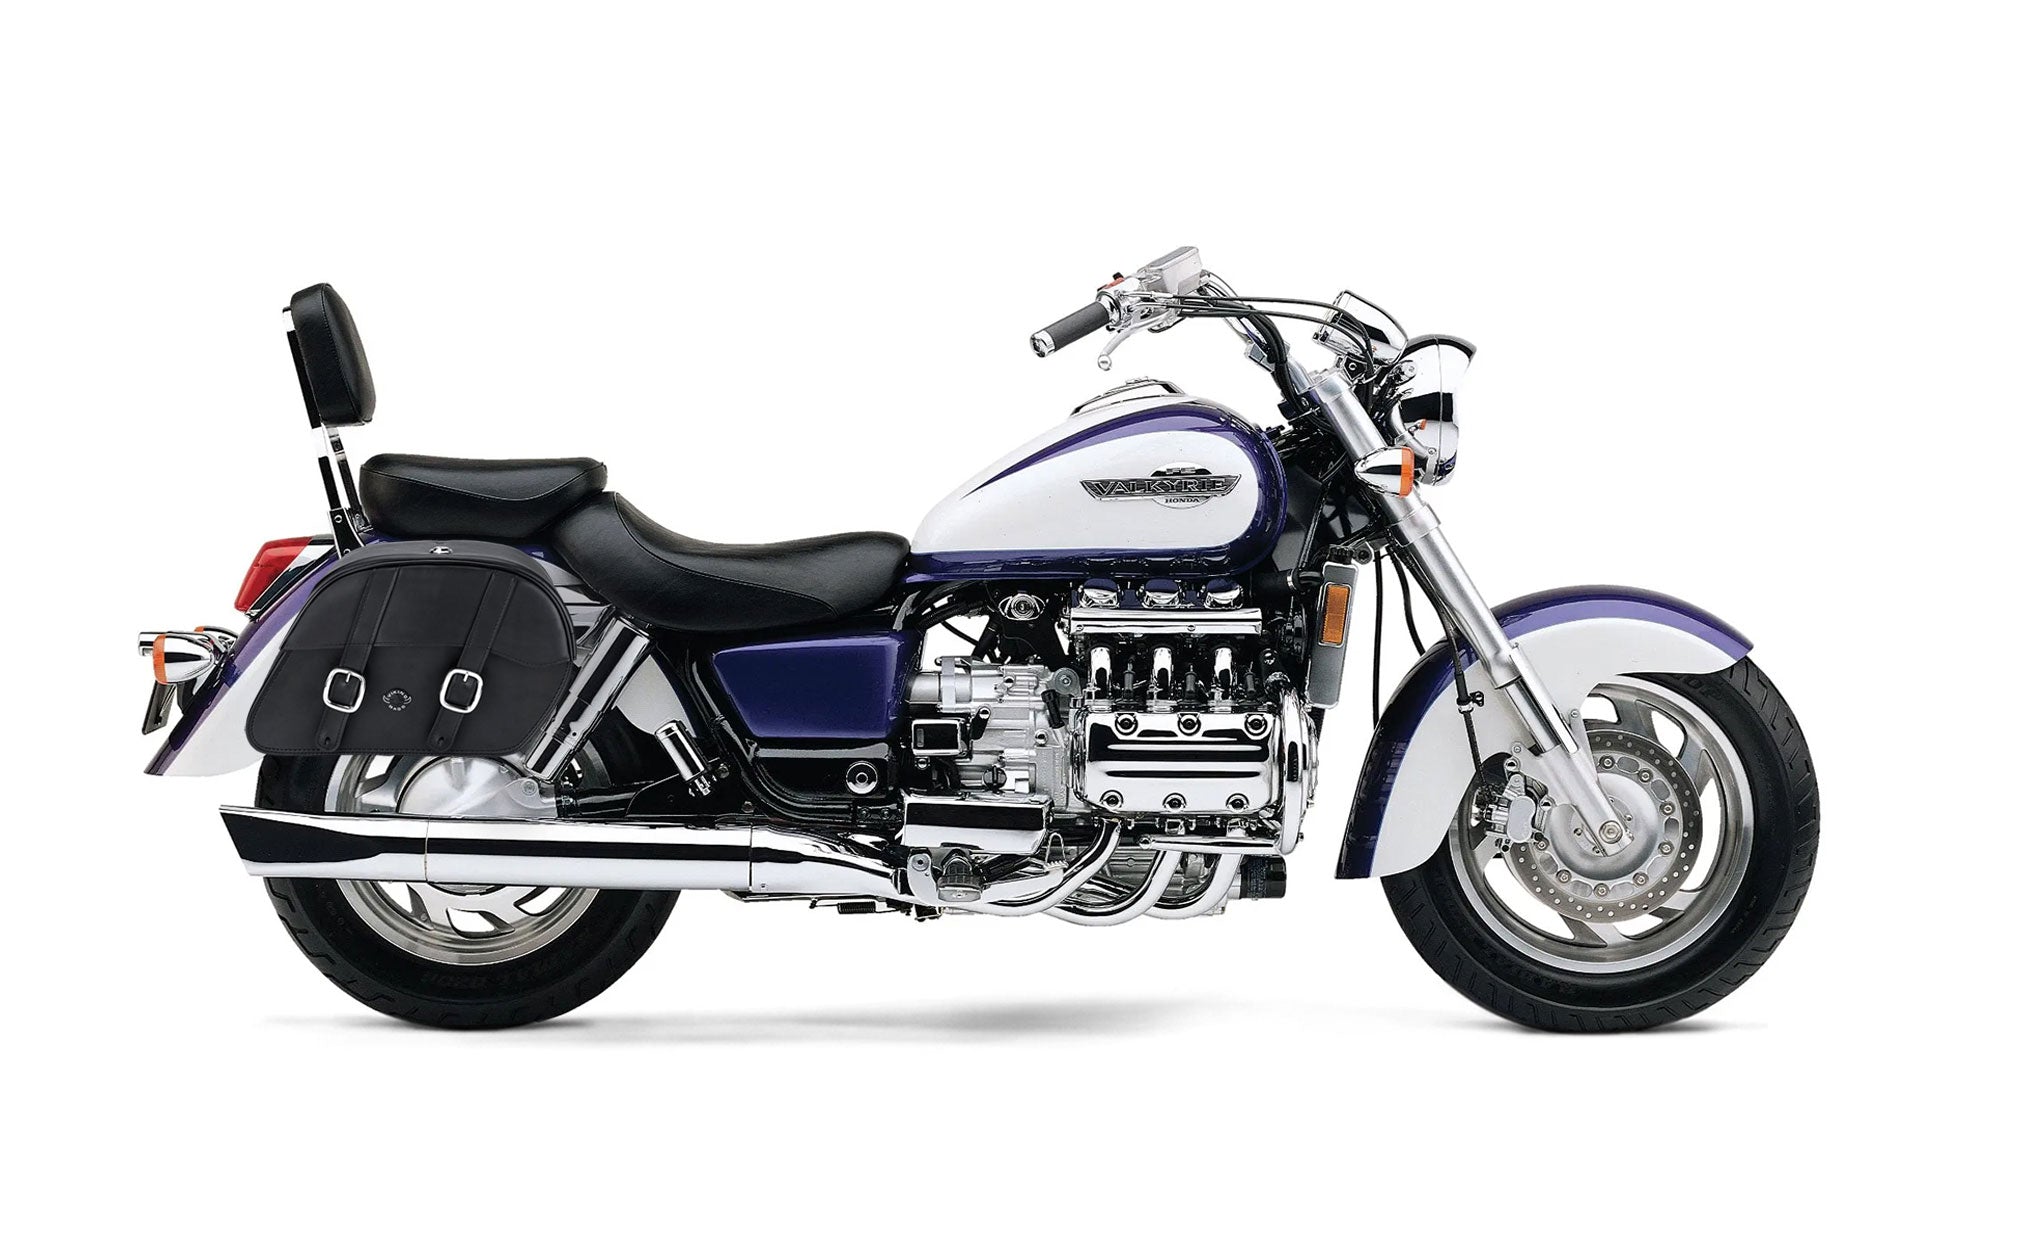 Viking Skarner Medium Lockable Honda Valkyrie 1500 Interstate Leather Motorcycle Saddlebags on Bike Photo @expand